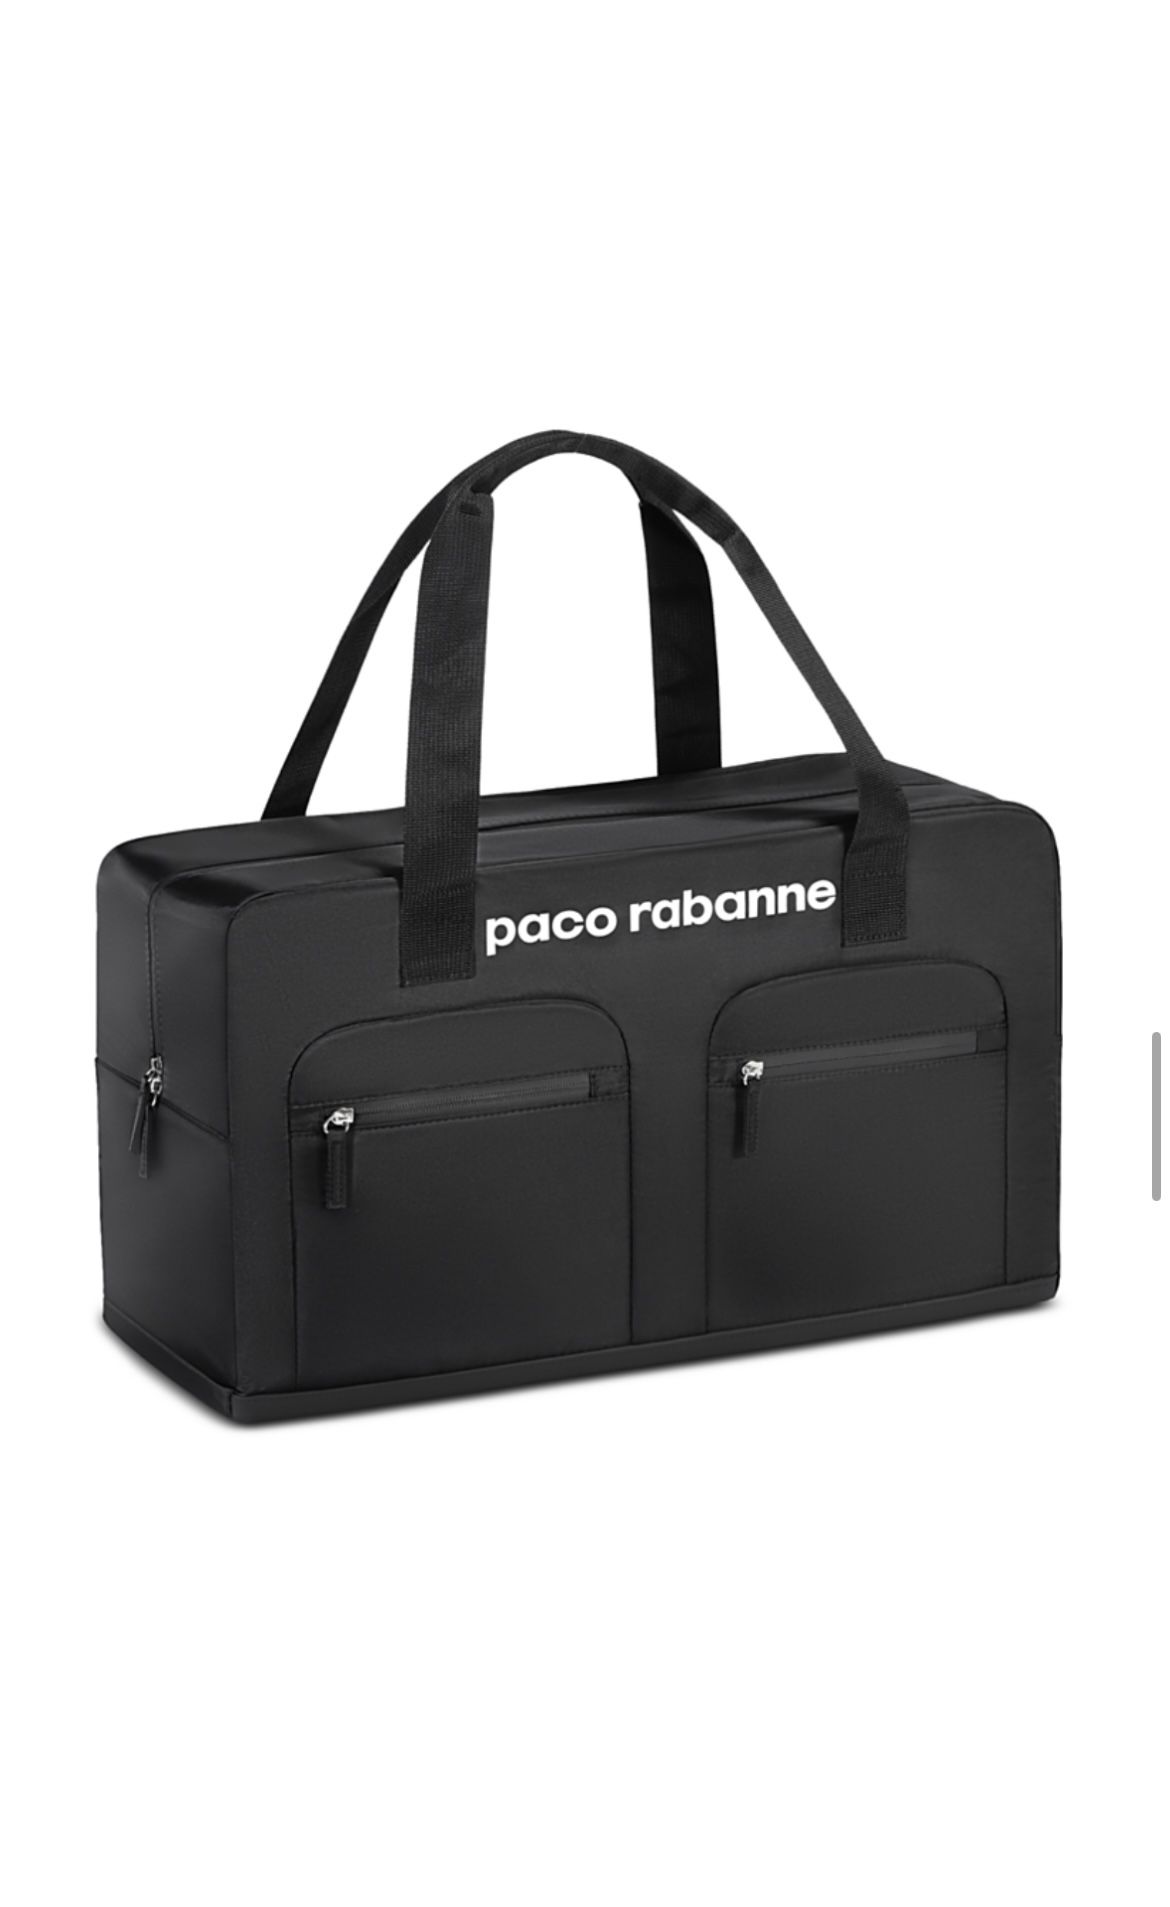 Paco Rabanne Weekend Bag - BRAND NEW